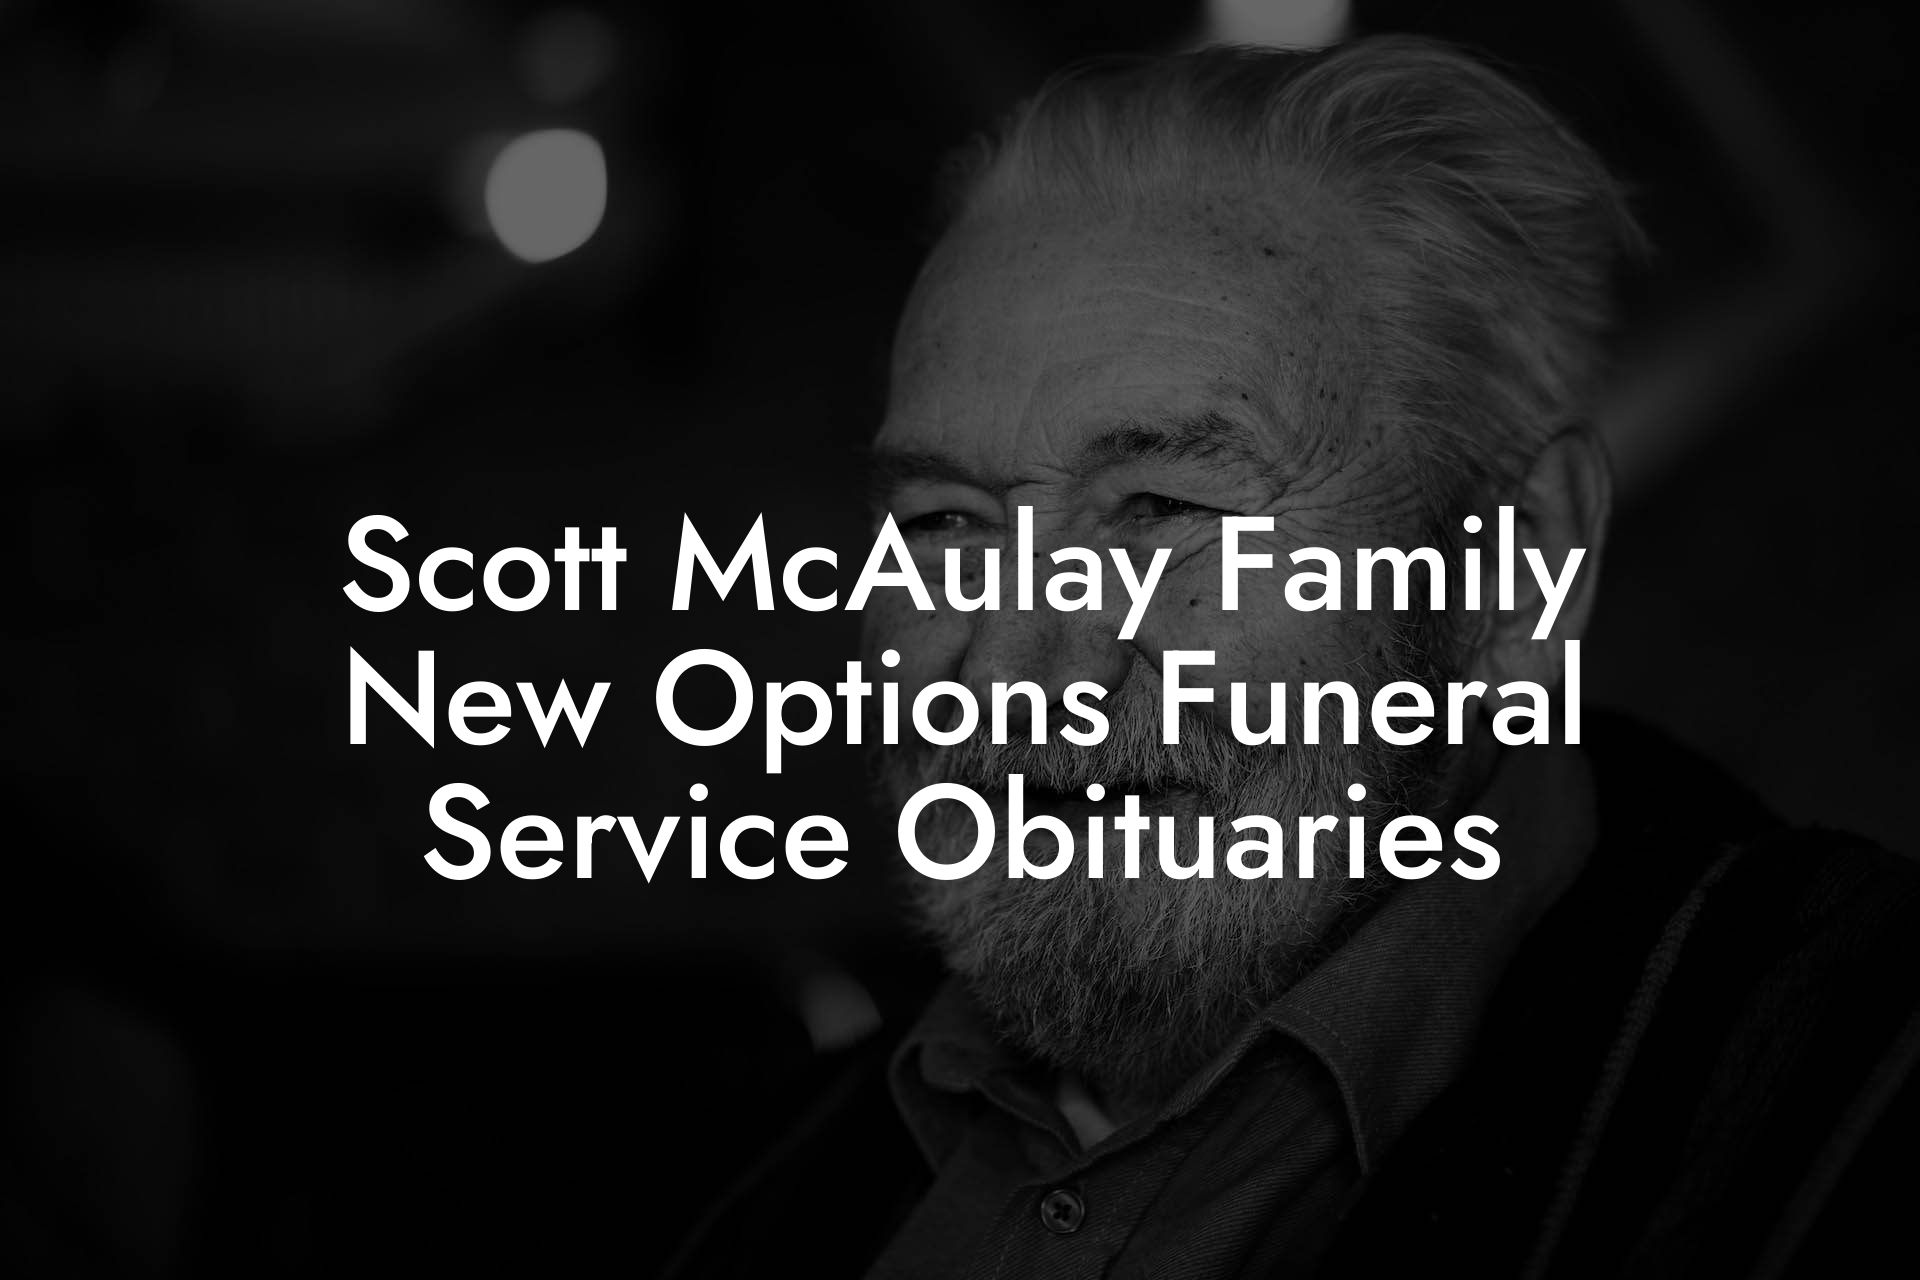 Scott McAulay Family New Options Funeral Service Obituaries